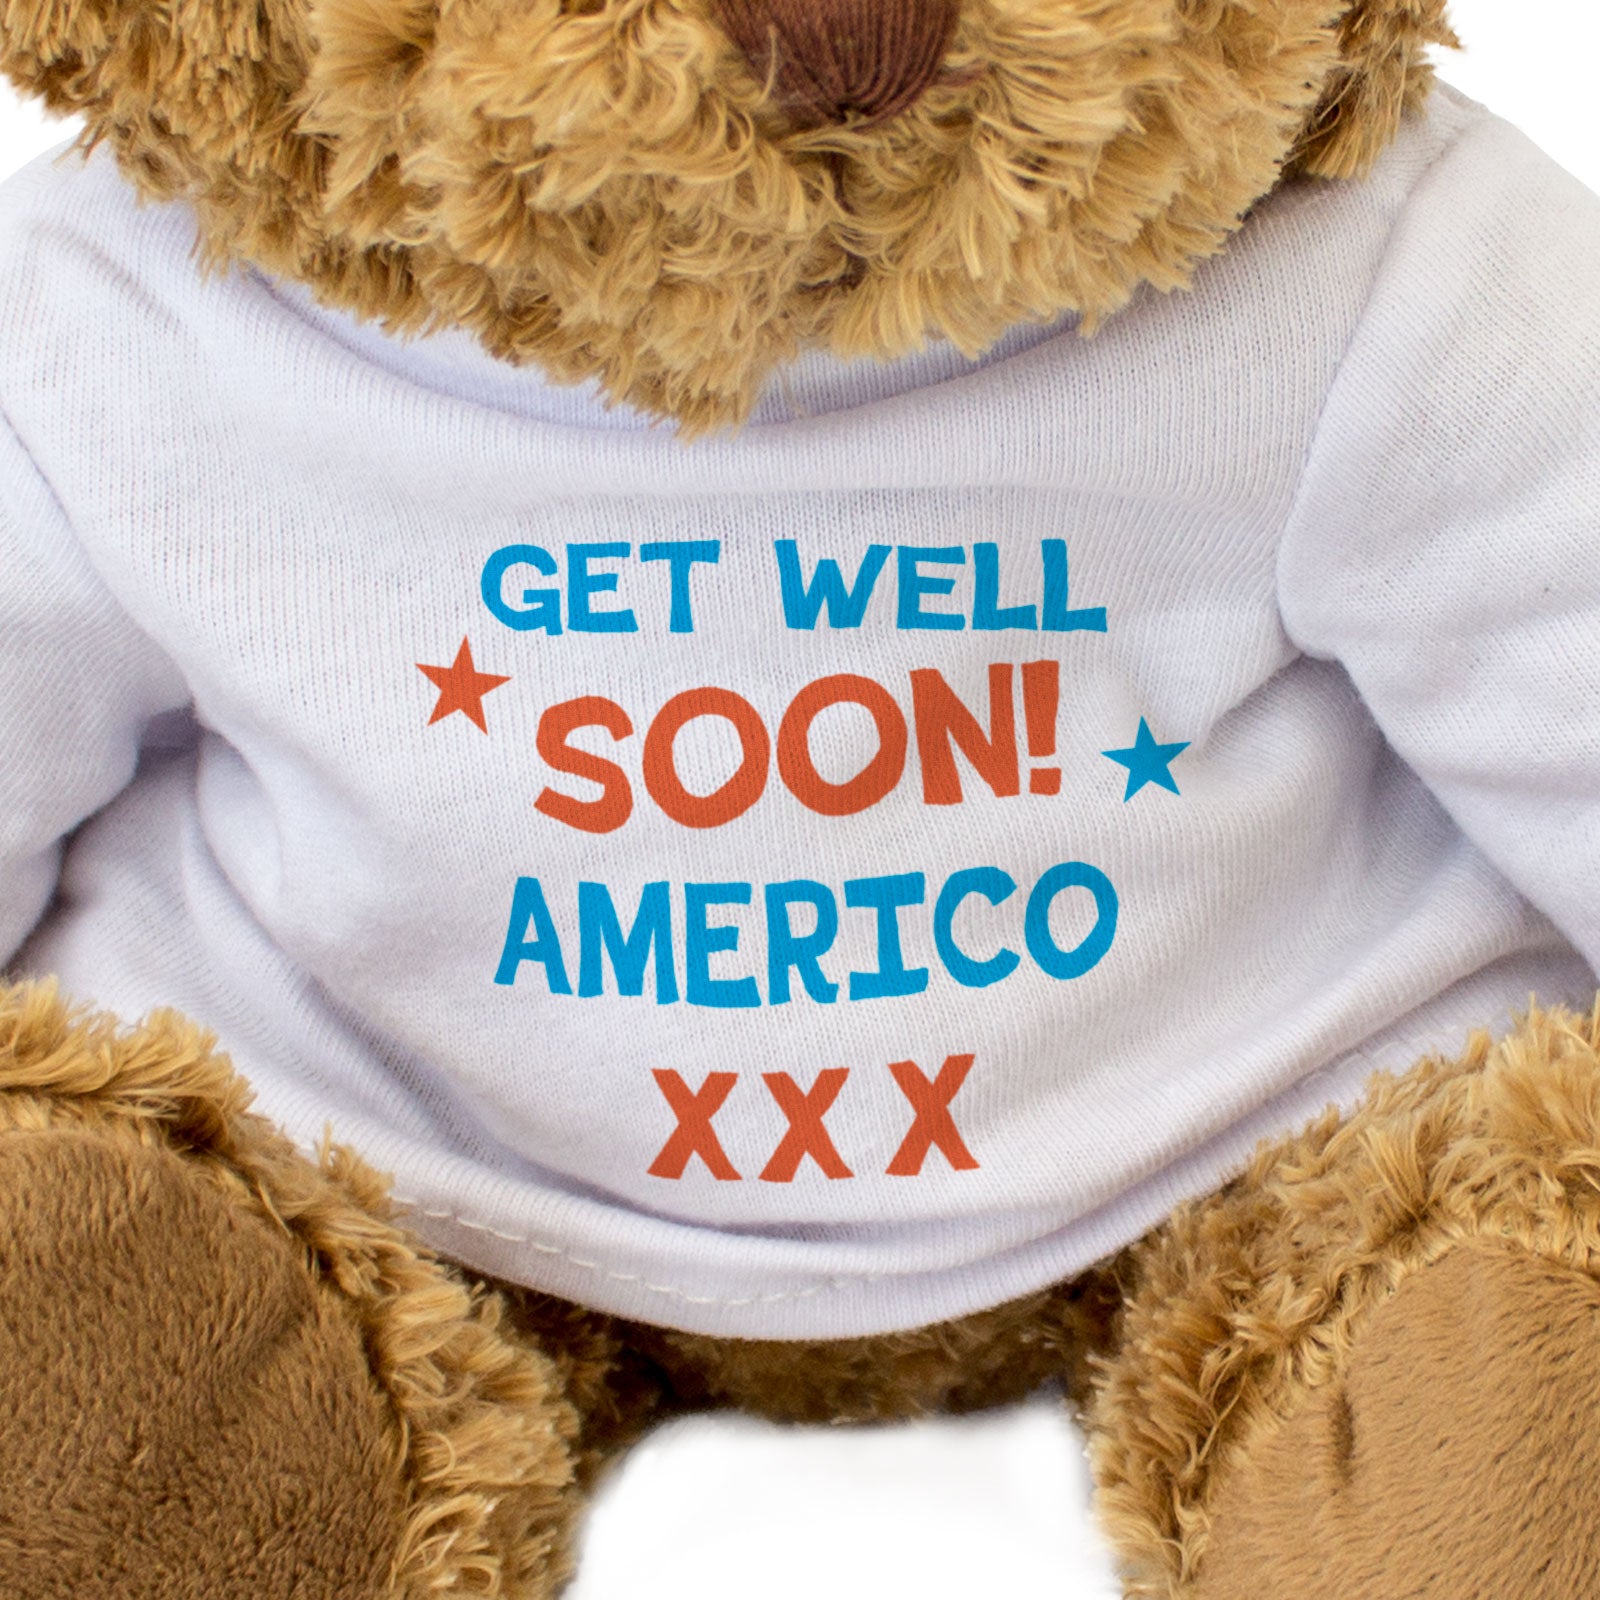 Get Well Soon Americo - Teddy Bear